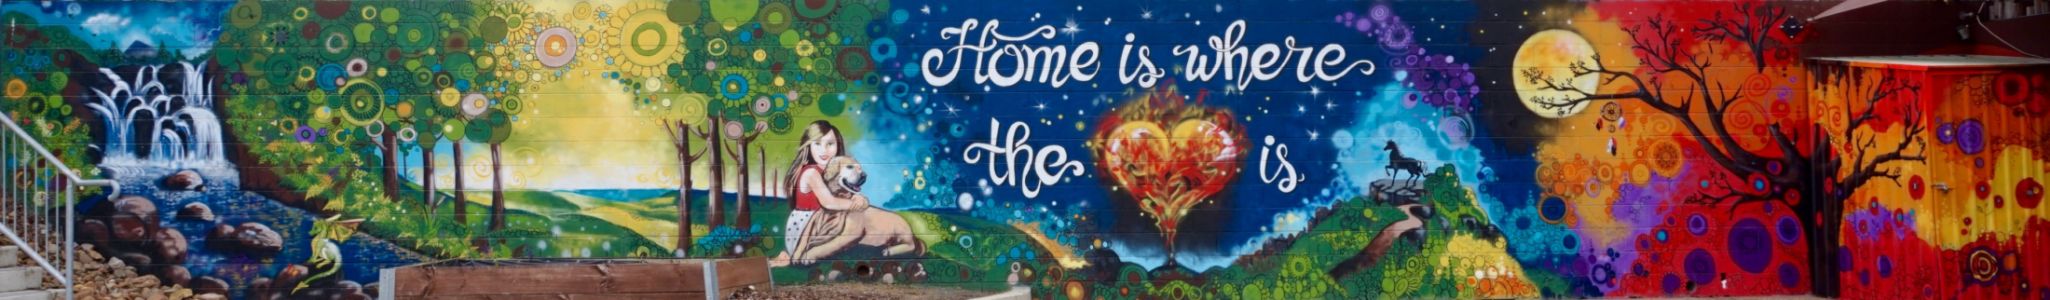 Home is where the heart is_Jindalee Mural_Kat's Mural Art_Kat Smirnoff